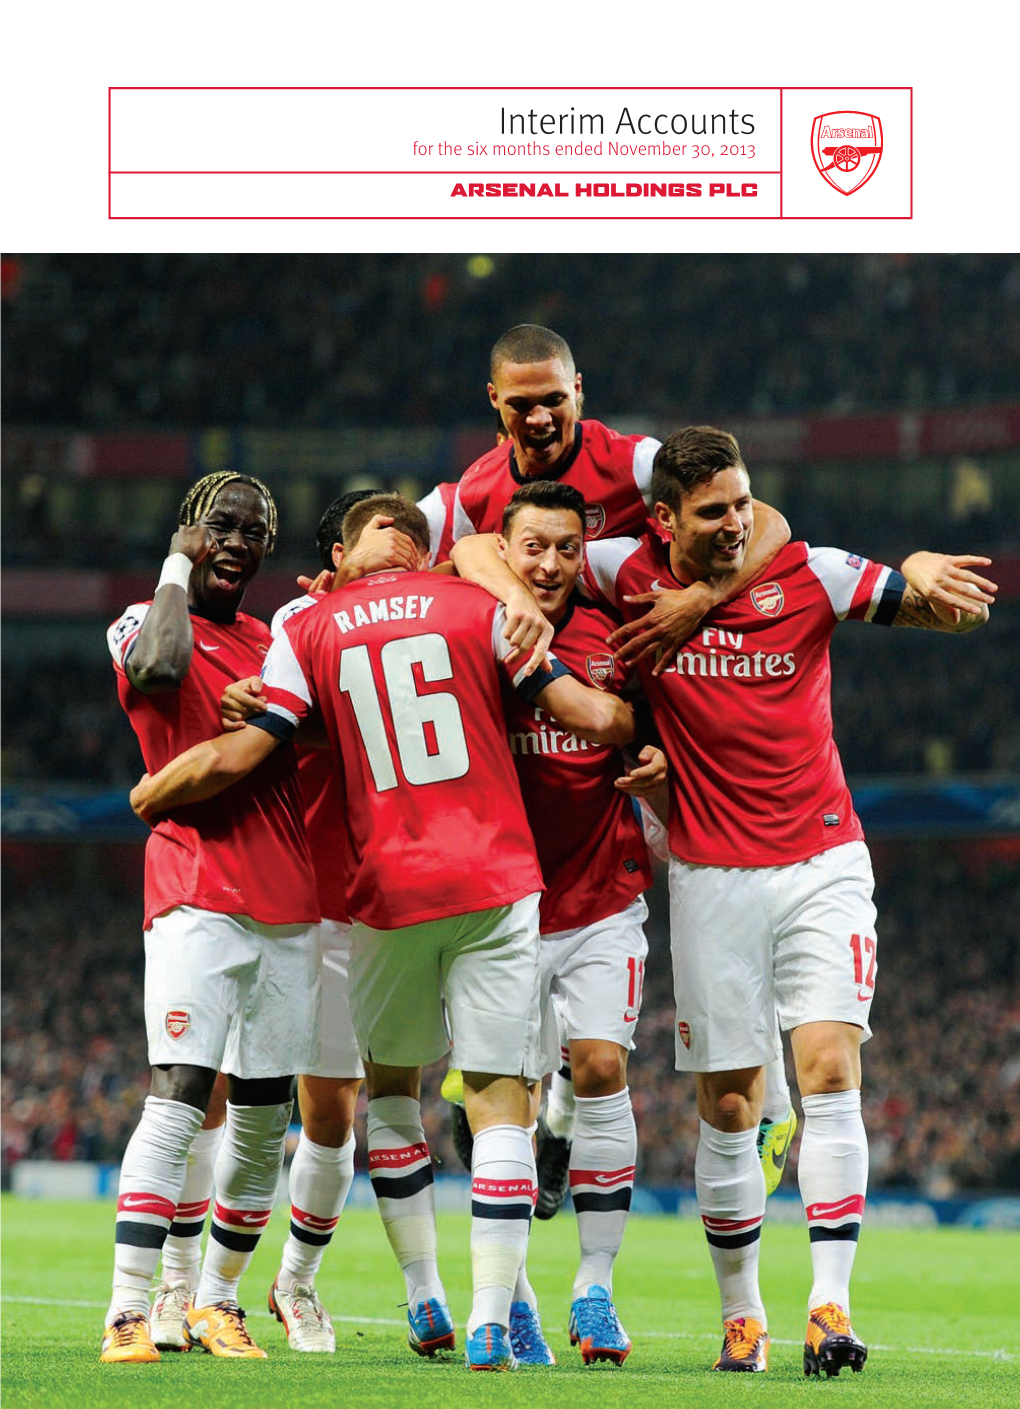 Arsenal Holdings Plc